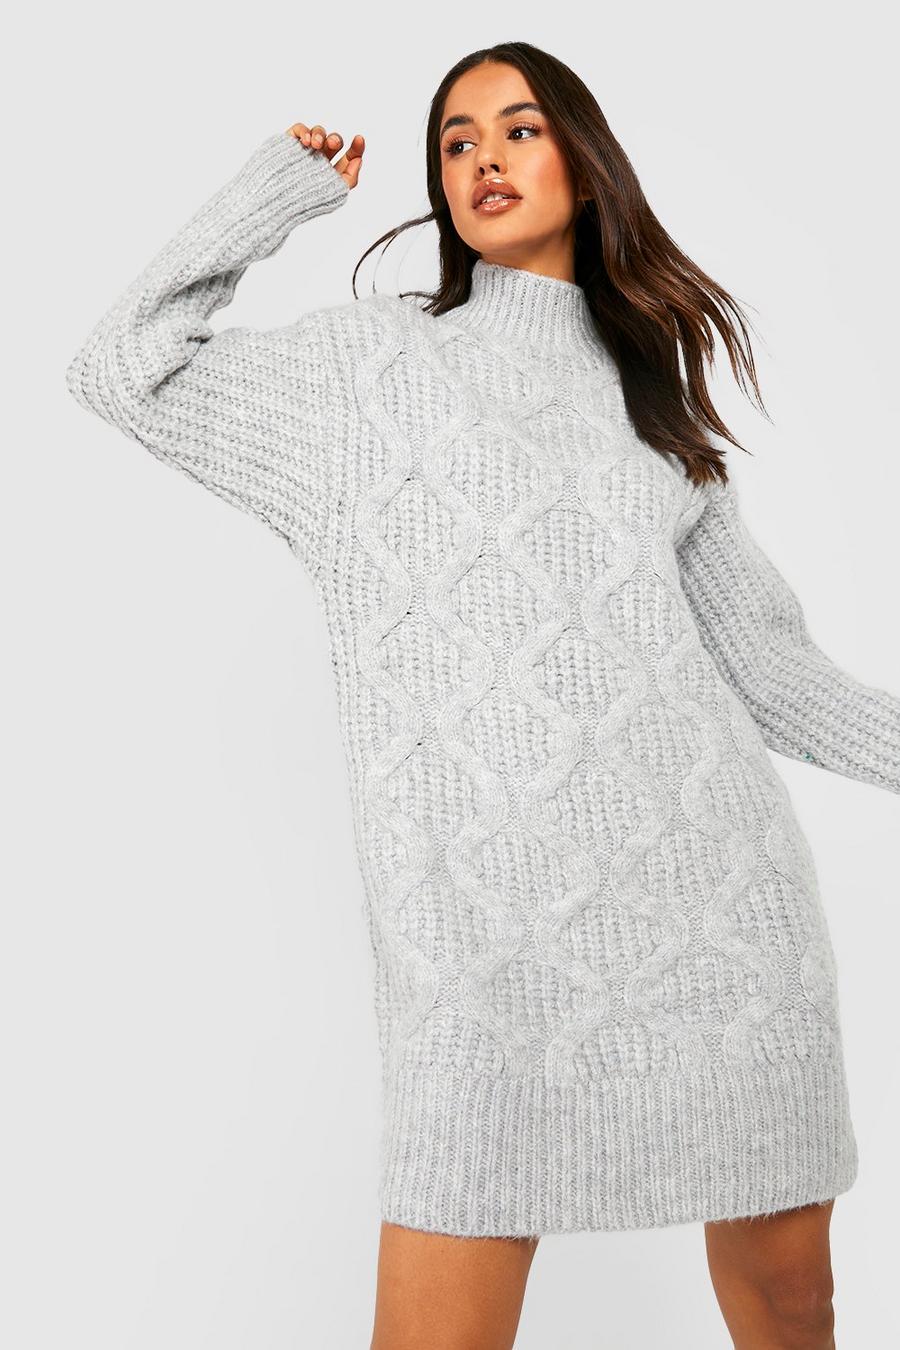 Grey Roll Neck Knit Sweater Dress